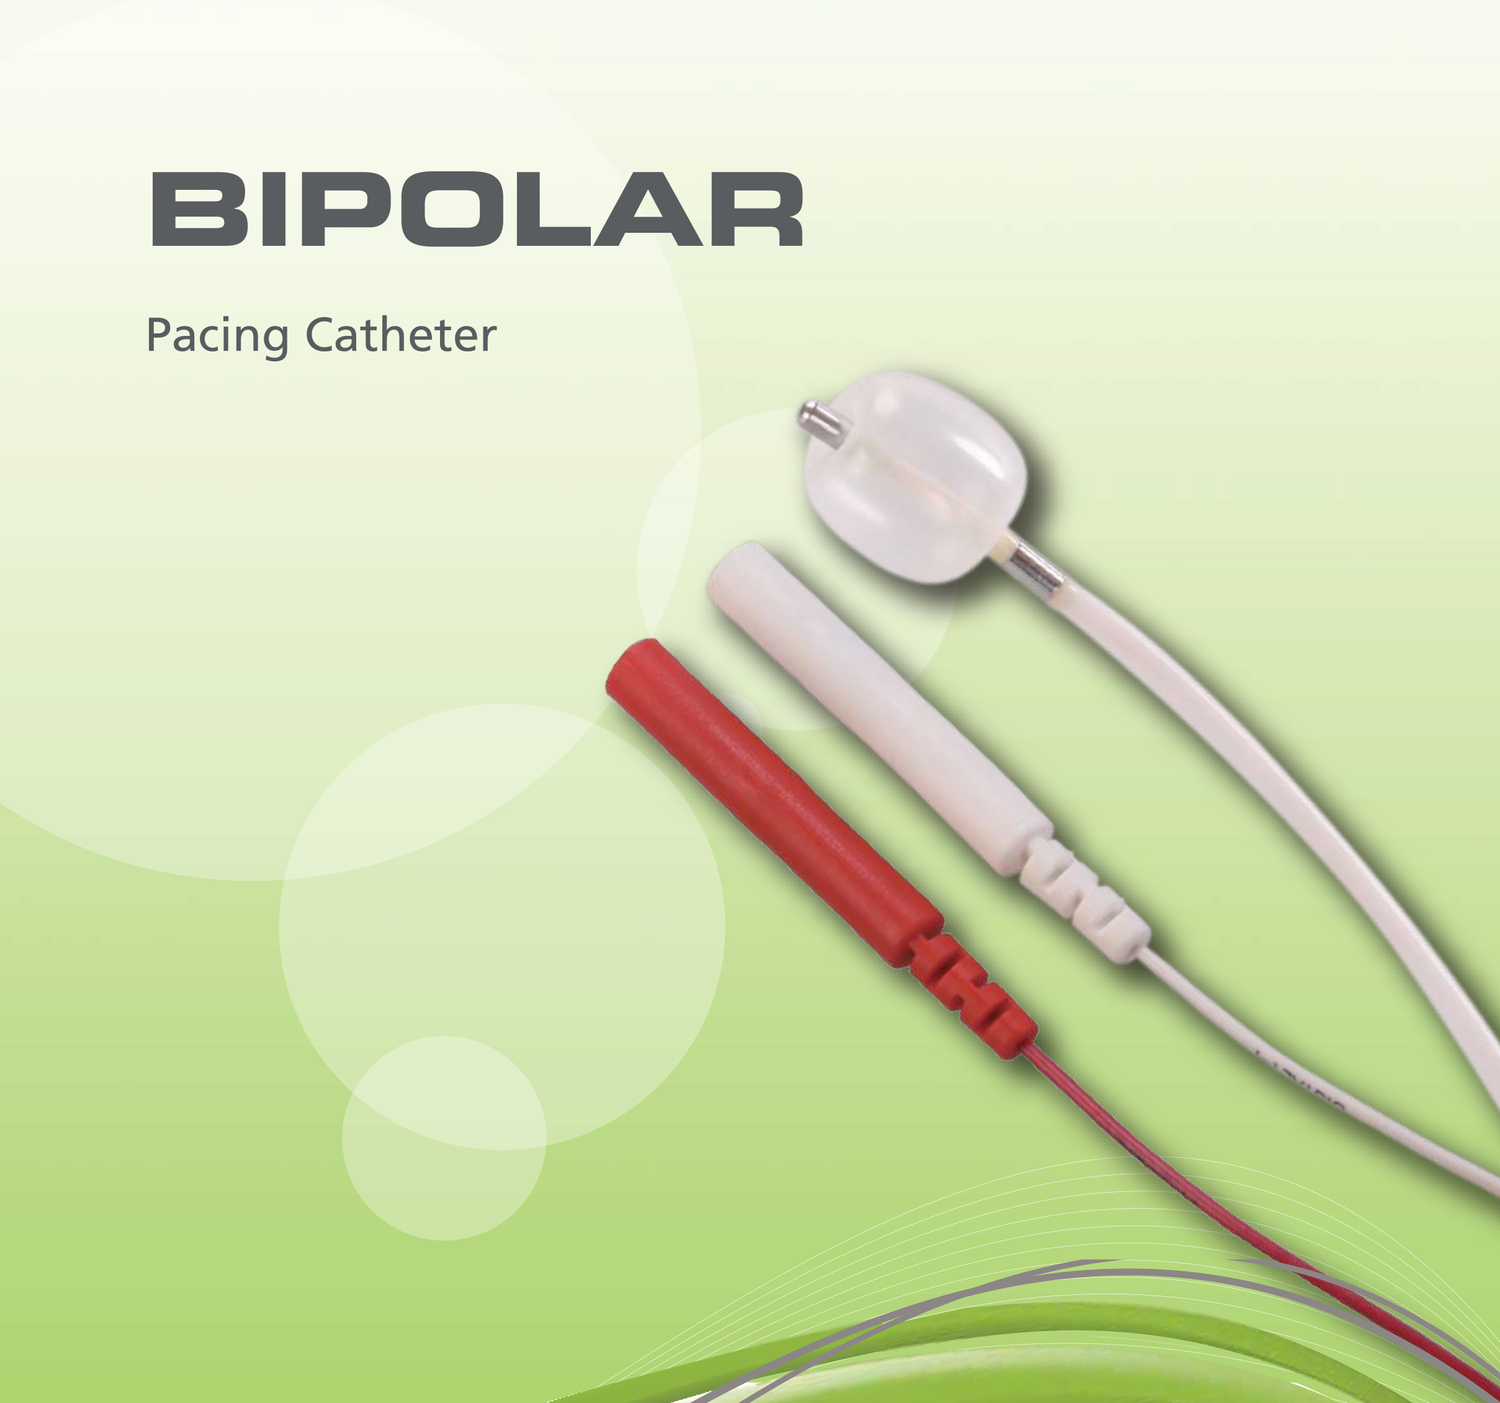 <p><span style="font-weight: bold;">BIPOLAR Pacing Catheter</span><br></p>